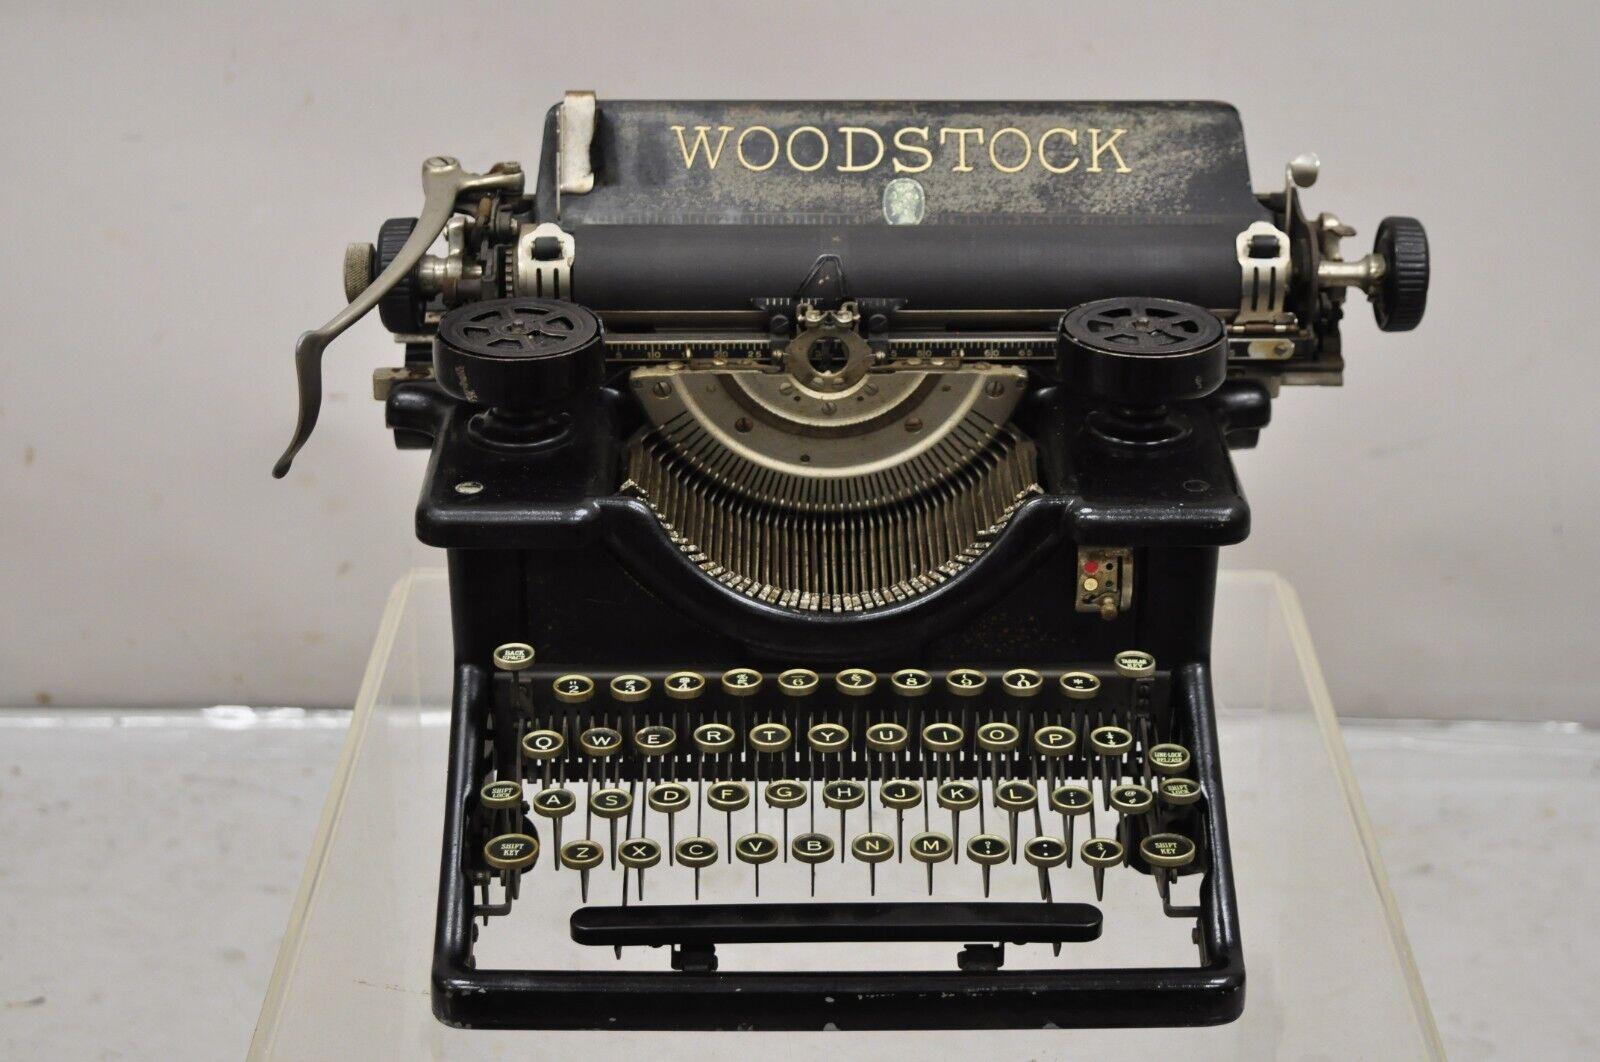 Antique Art Deco Woodstock Manual Typewriter. Circa 1930s. Measurements: 9